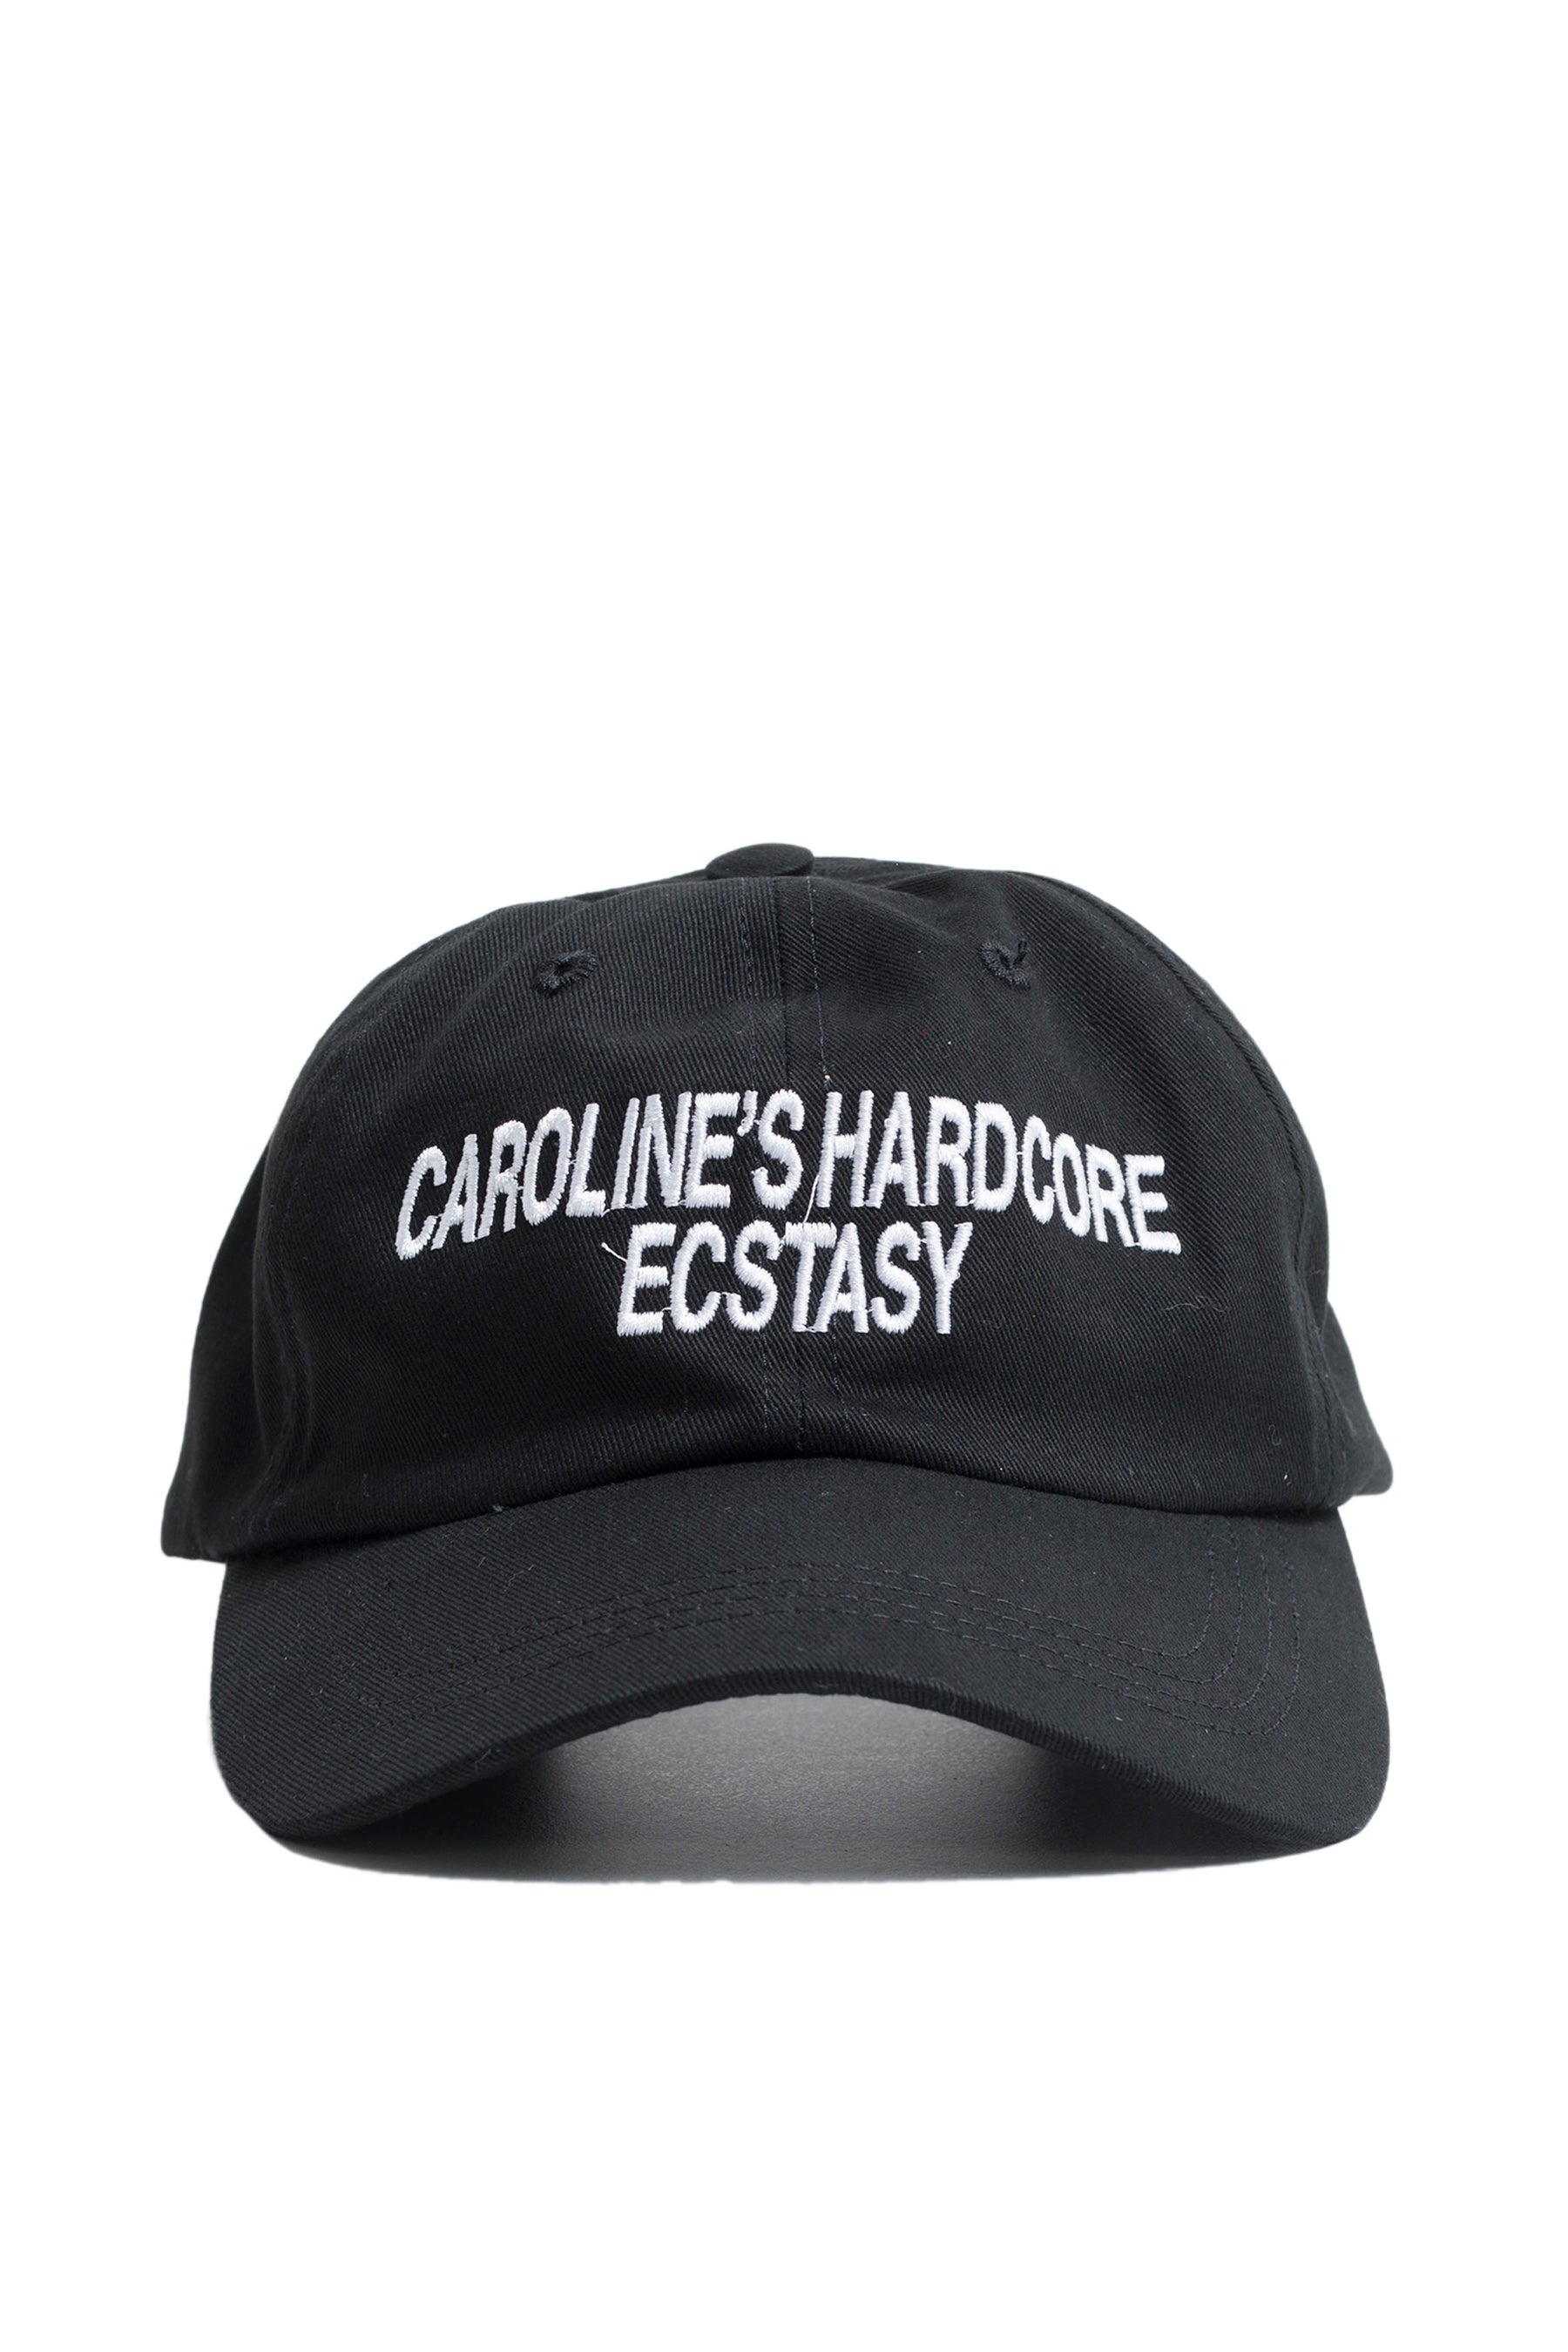 CAROLINE'S HARDCORE ECSTTASY 6-PANEL HAT / BLK/WHT - 1